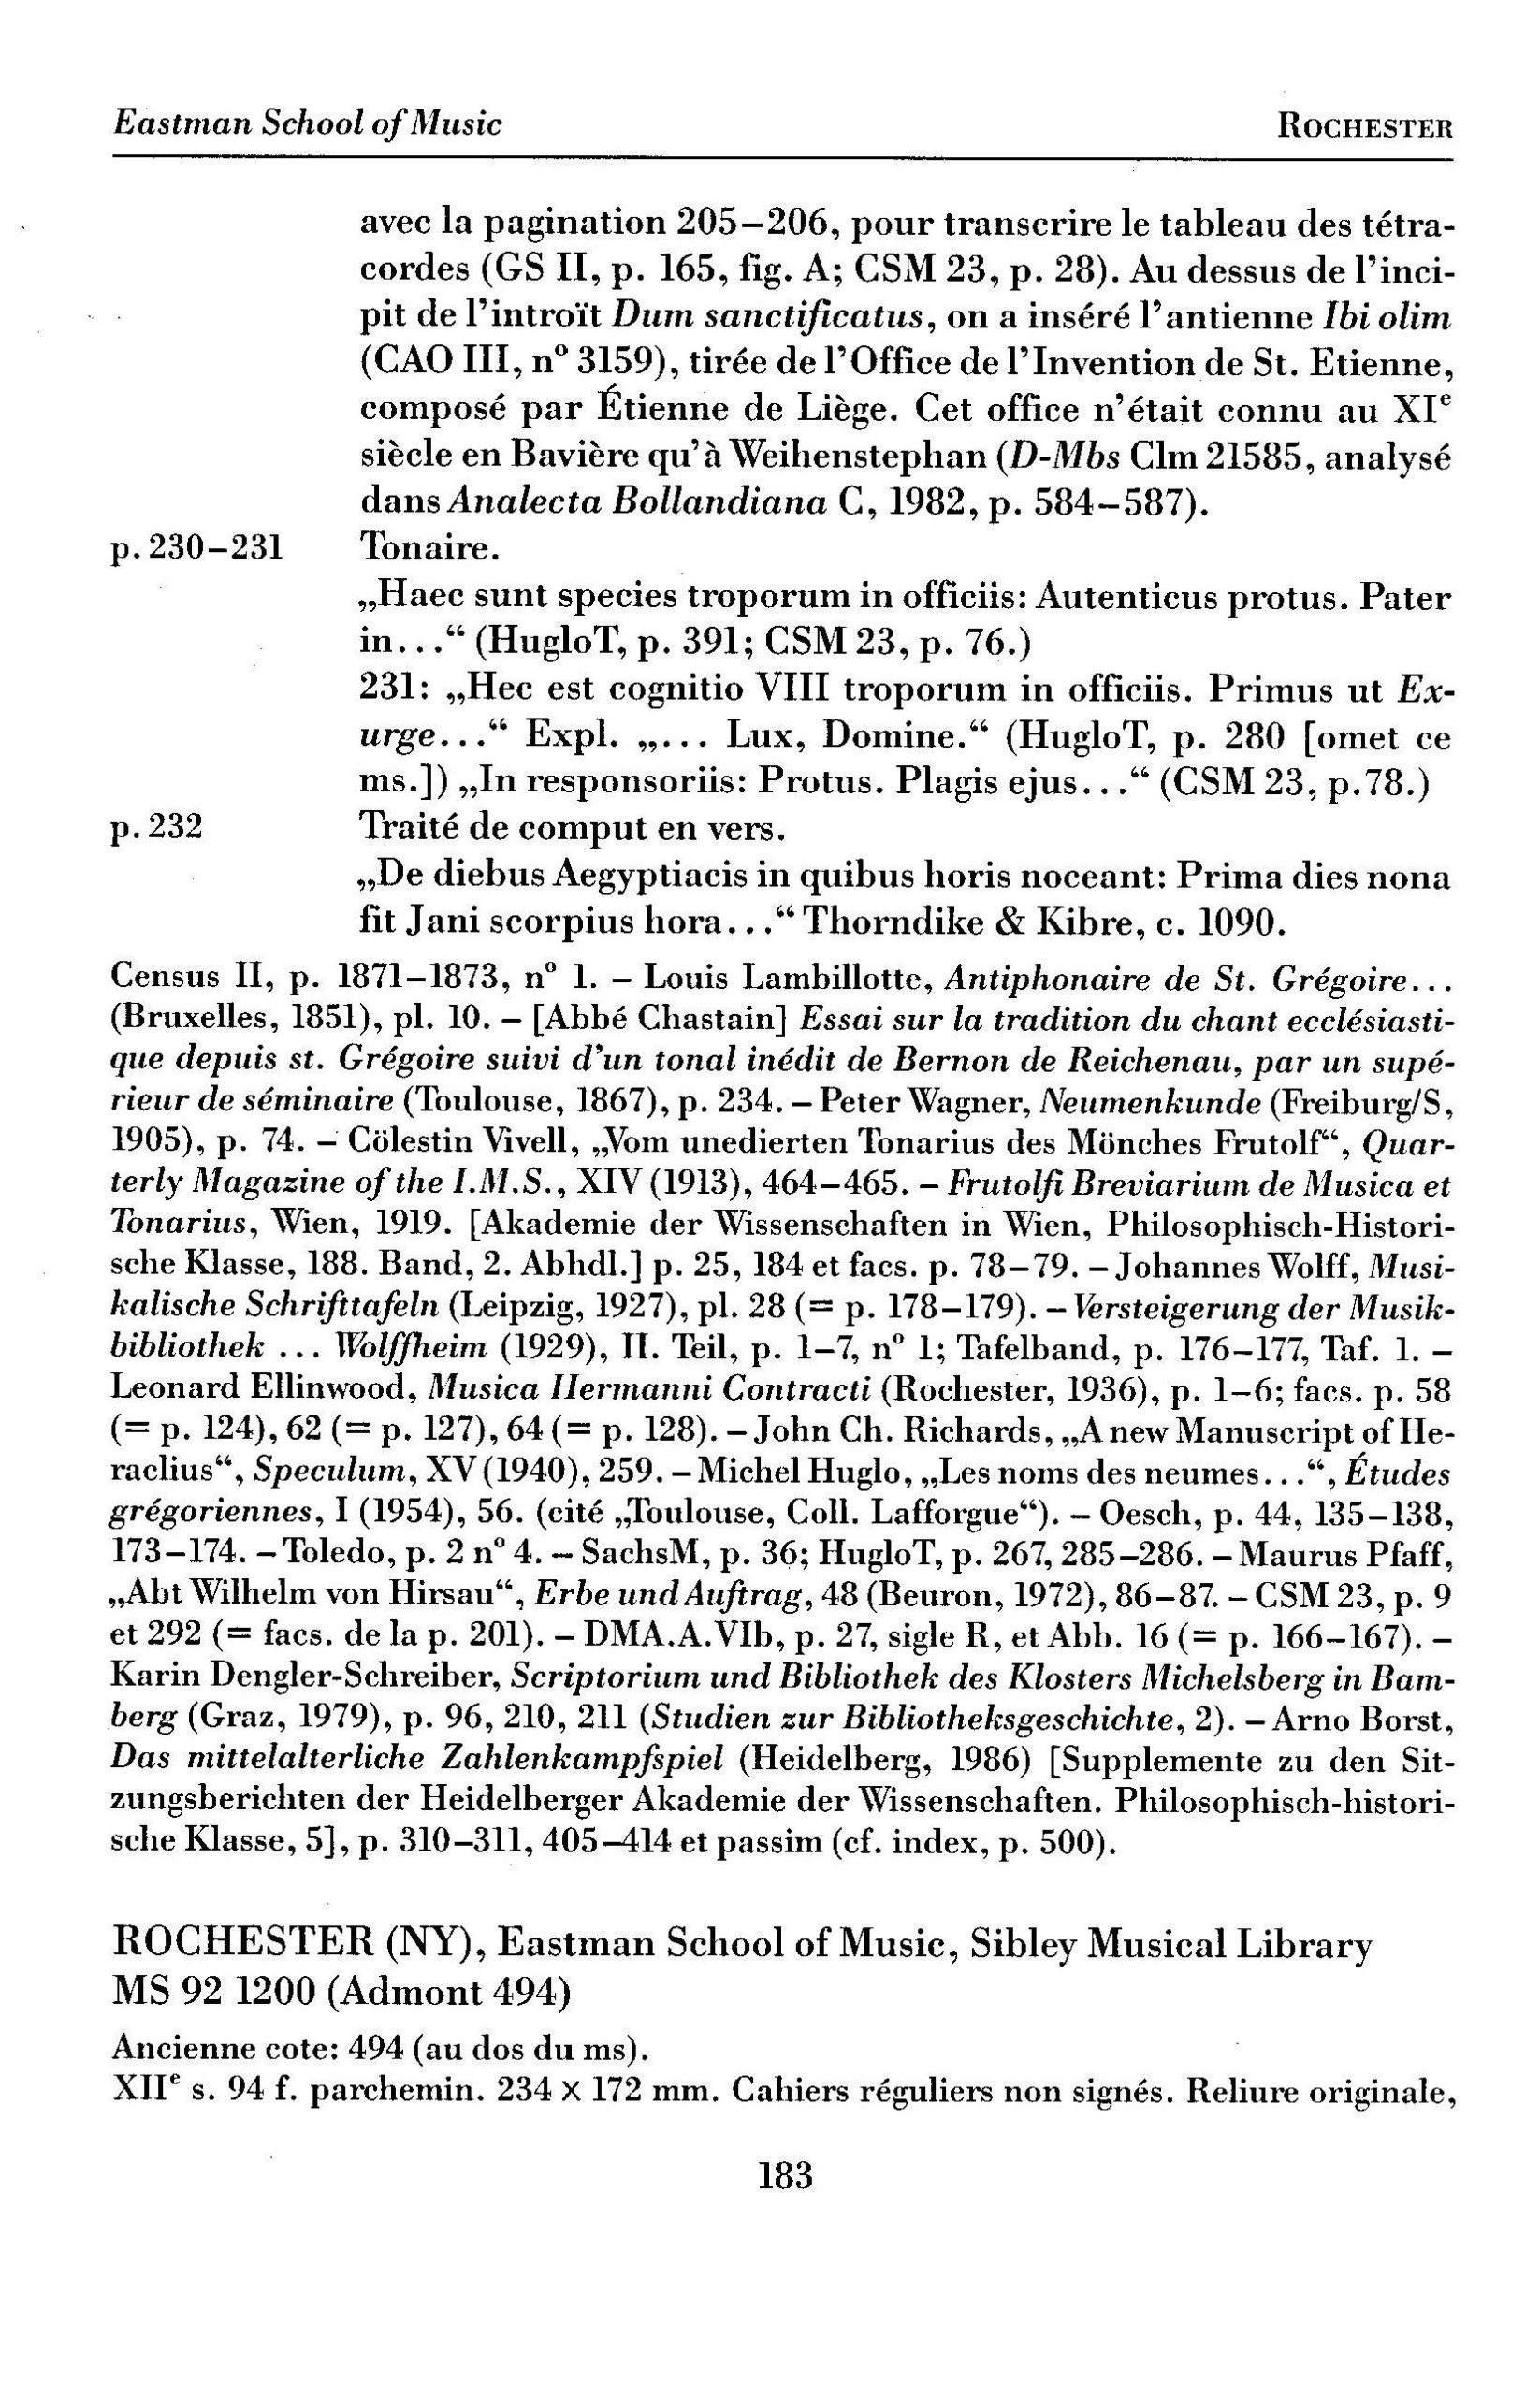 RISM IV, description of Rochester Codex, page 4